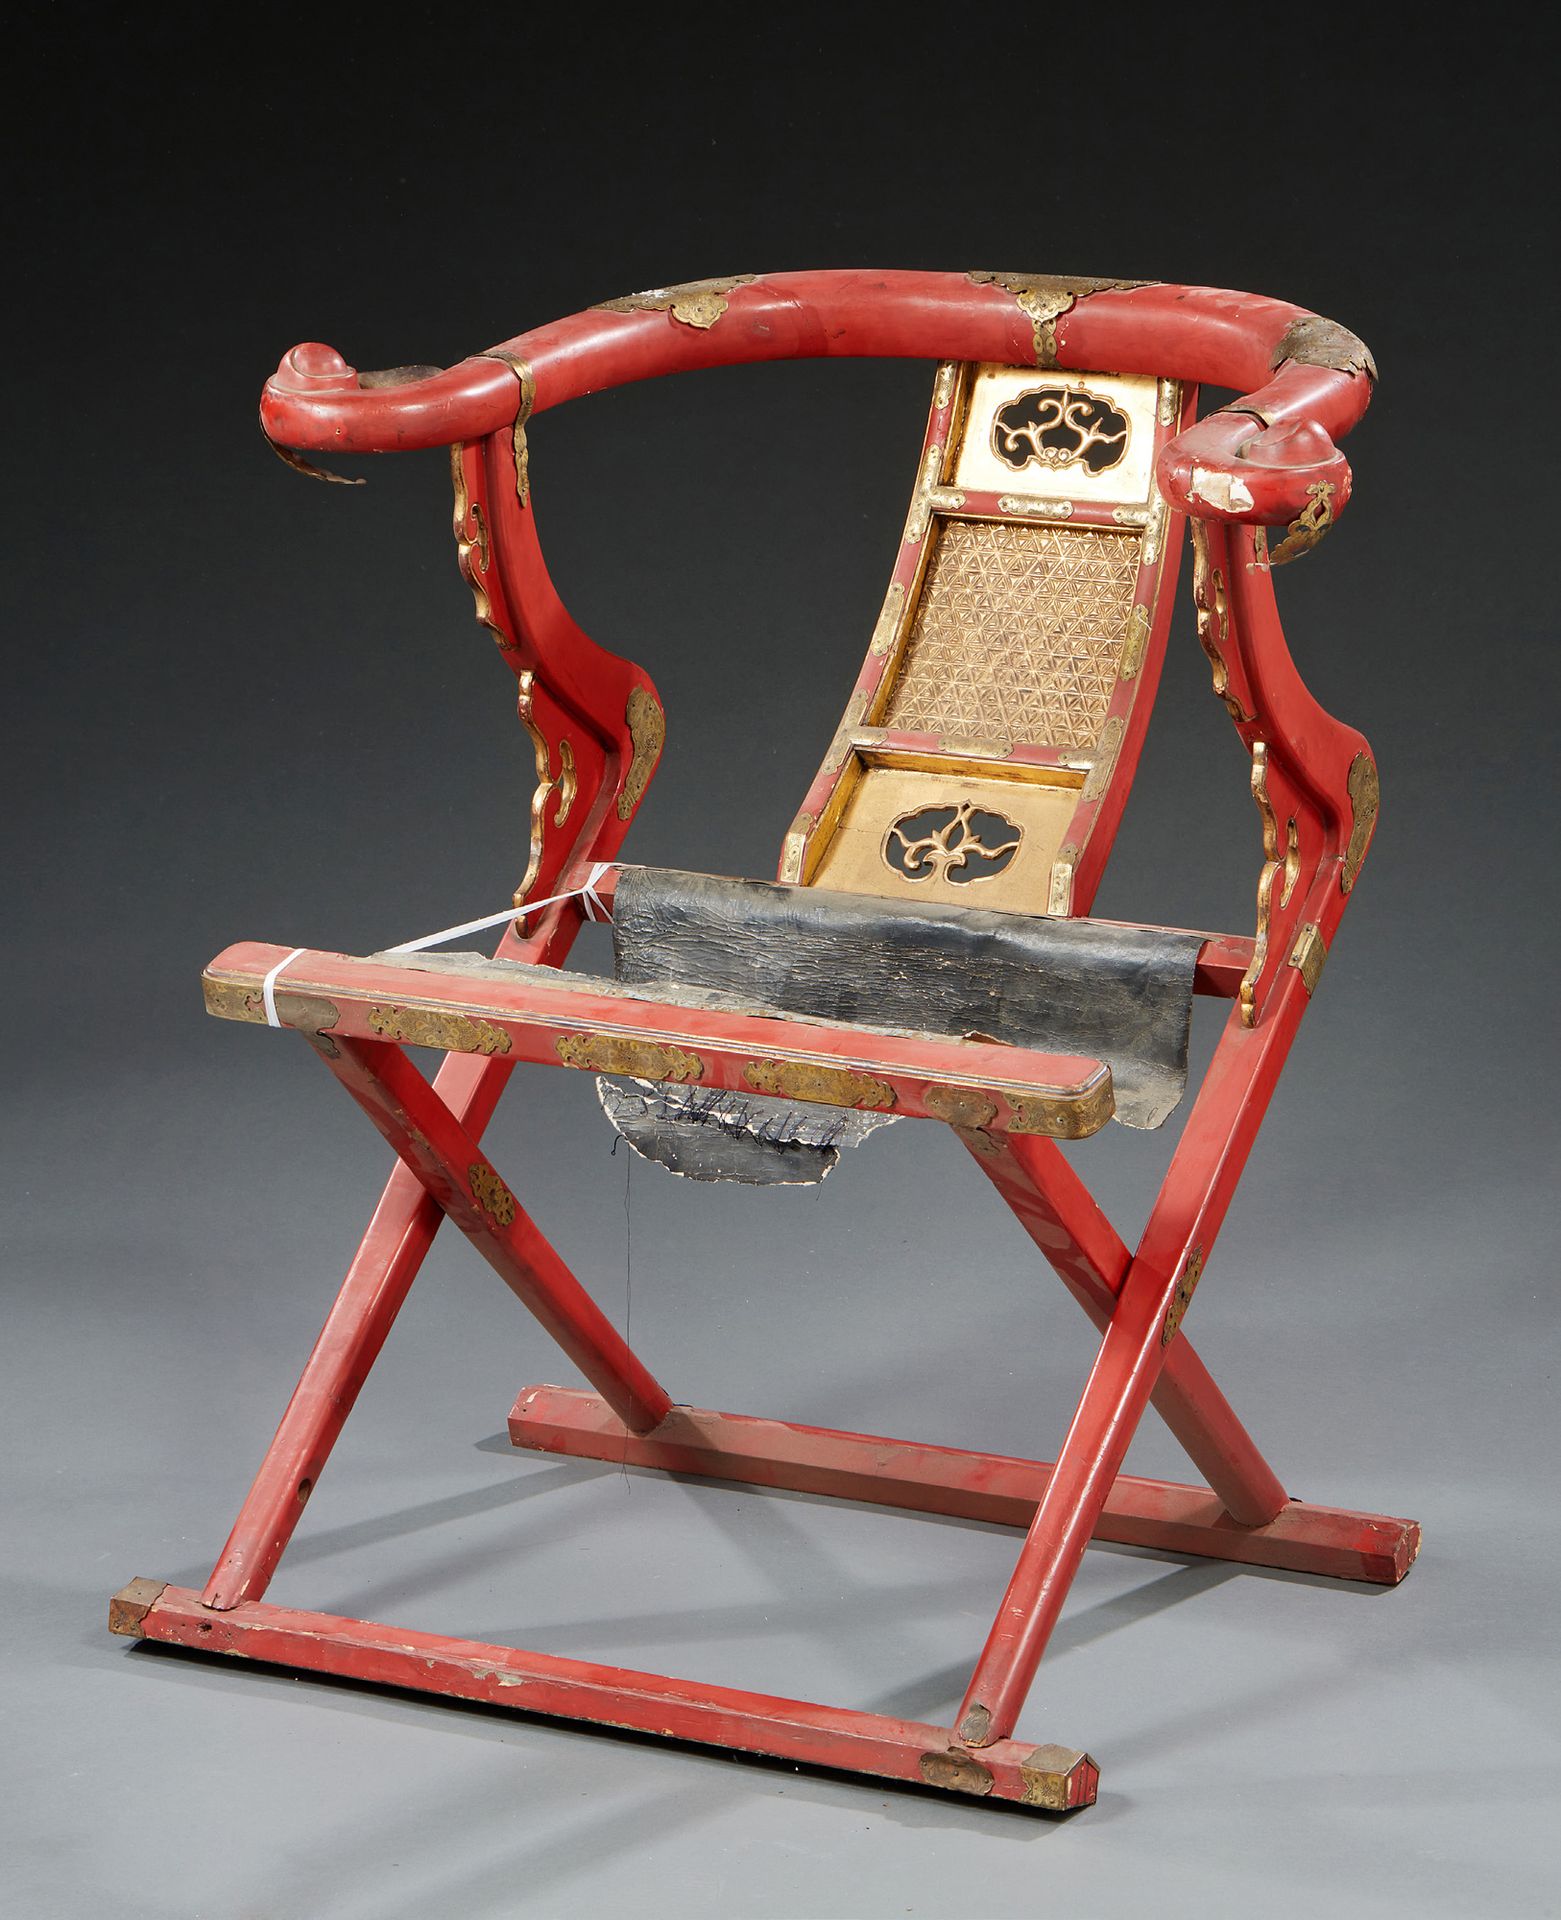 CHINE 一张红漆和镀金的折叠式礼仪扶手椅，丰富的镀金和金属装饰，镂空的椅背，损坏的皮革座椅。
19世纪。
Dim: 105 x 81 cm (chap, w&hellip;